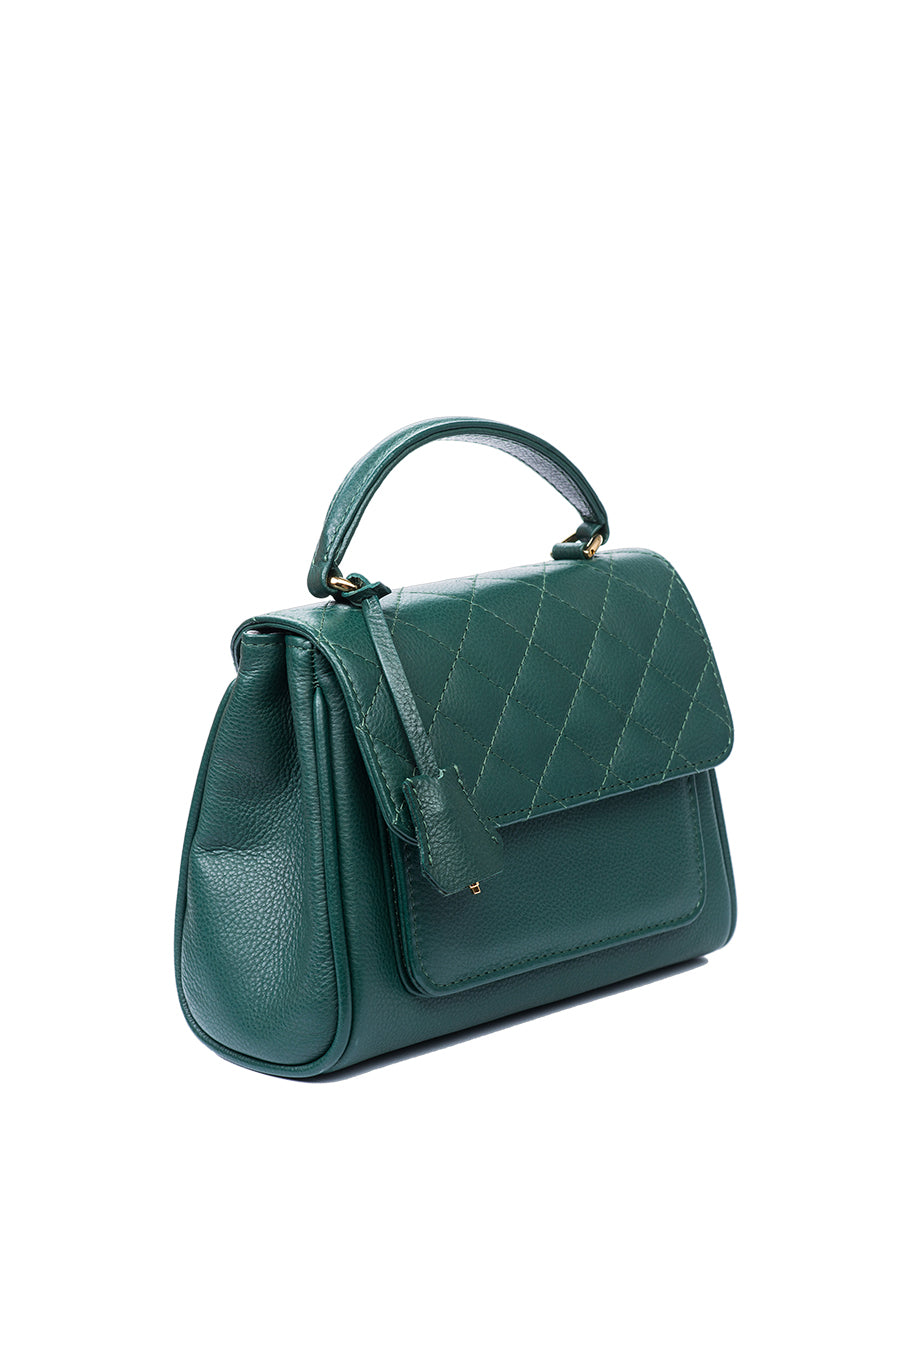 Small_green_handbag by Inga_Xavier_